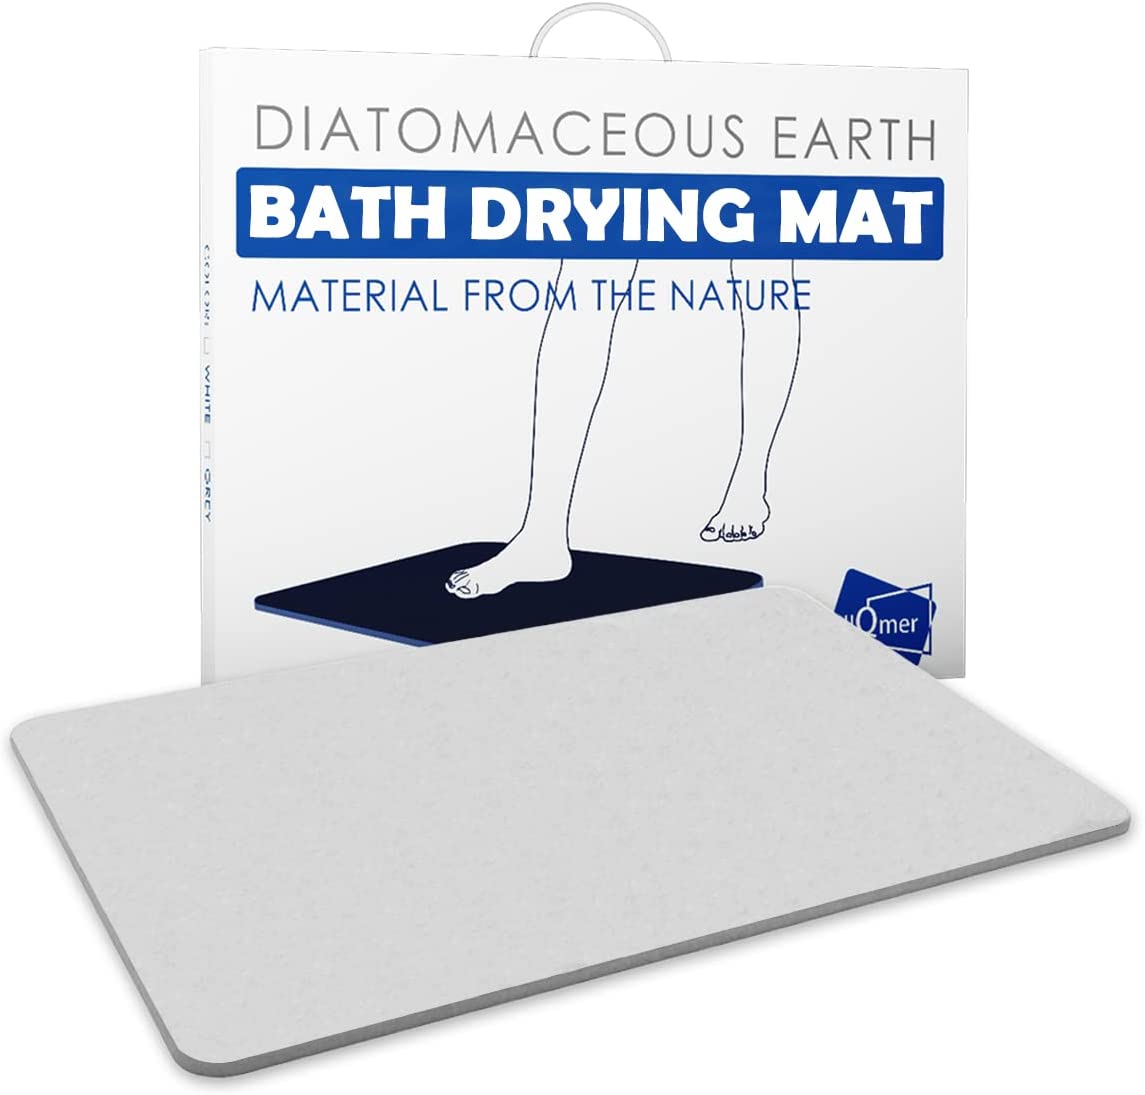  WALL QMER Bath Stone Mat, 23.5 x 15.5 Fast Drying Absorbent  Natural Diatomaceous Earth Mat, Anti-Slip Floor Shower Mats for Bathroom,  Kitchen, Light Gray : Home & Kitchen